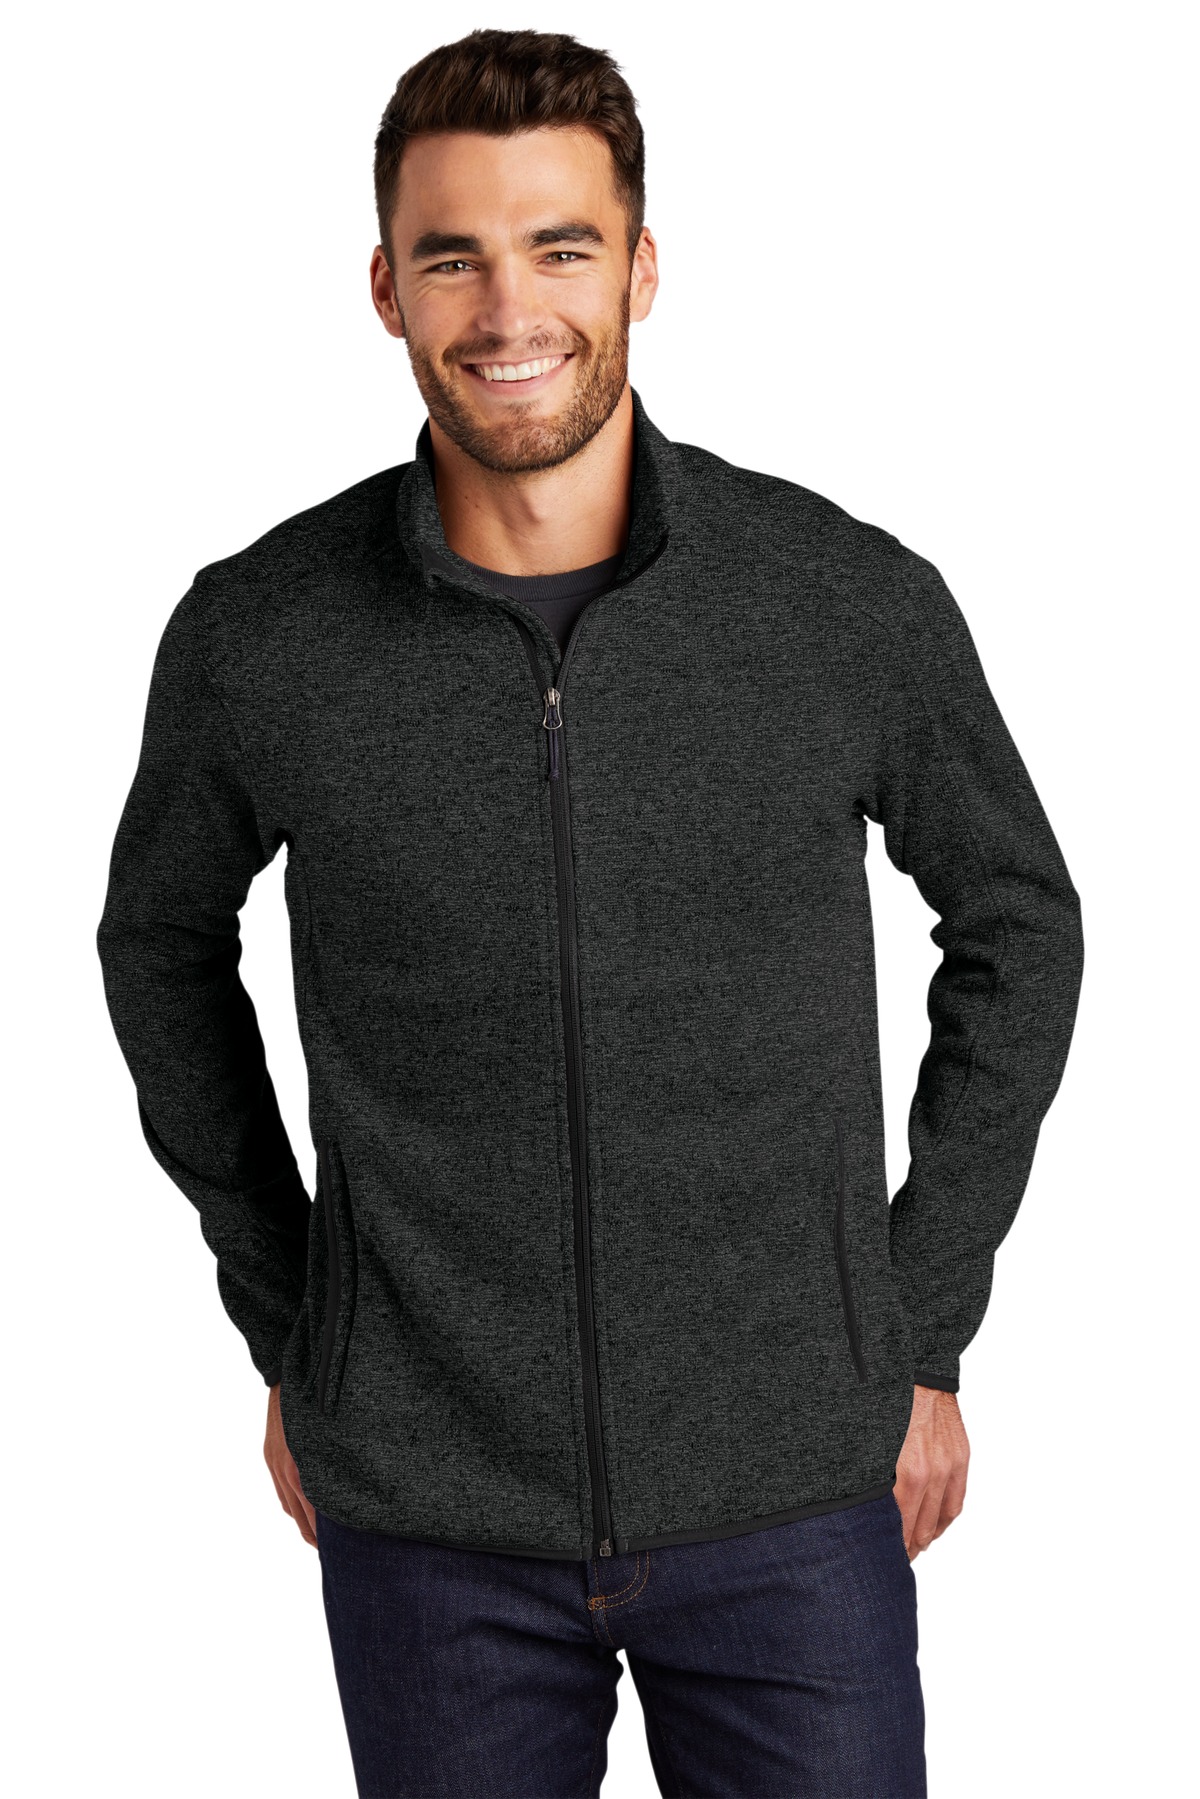 Port Authority Outerwear, Sweat shirts & Fleece for Hospitality ® Sweater Fleece Jacket.-Port Authority